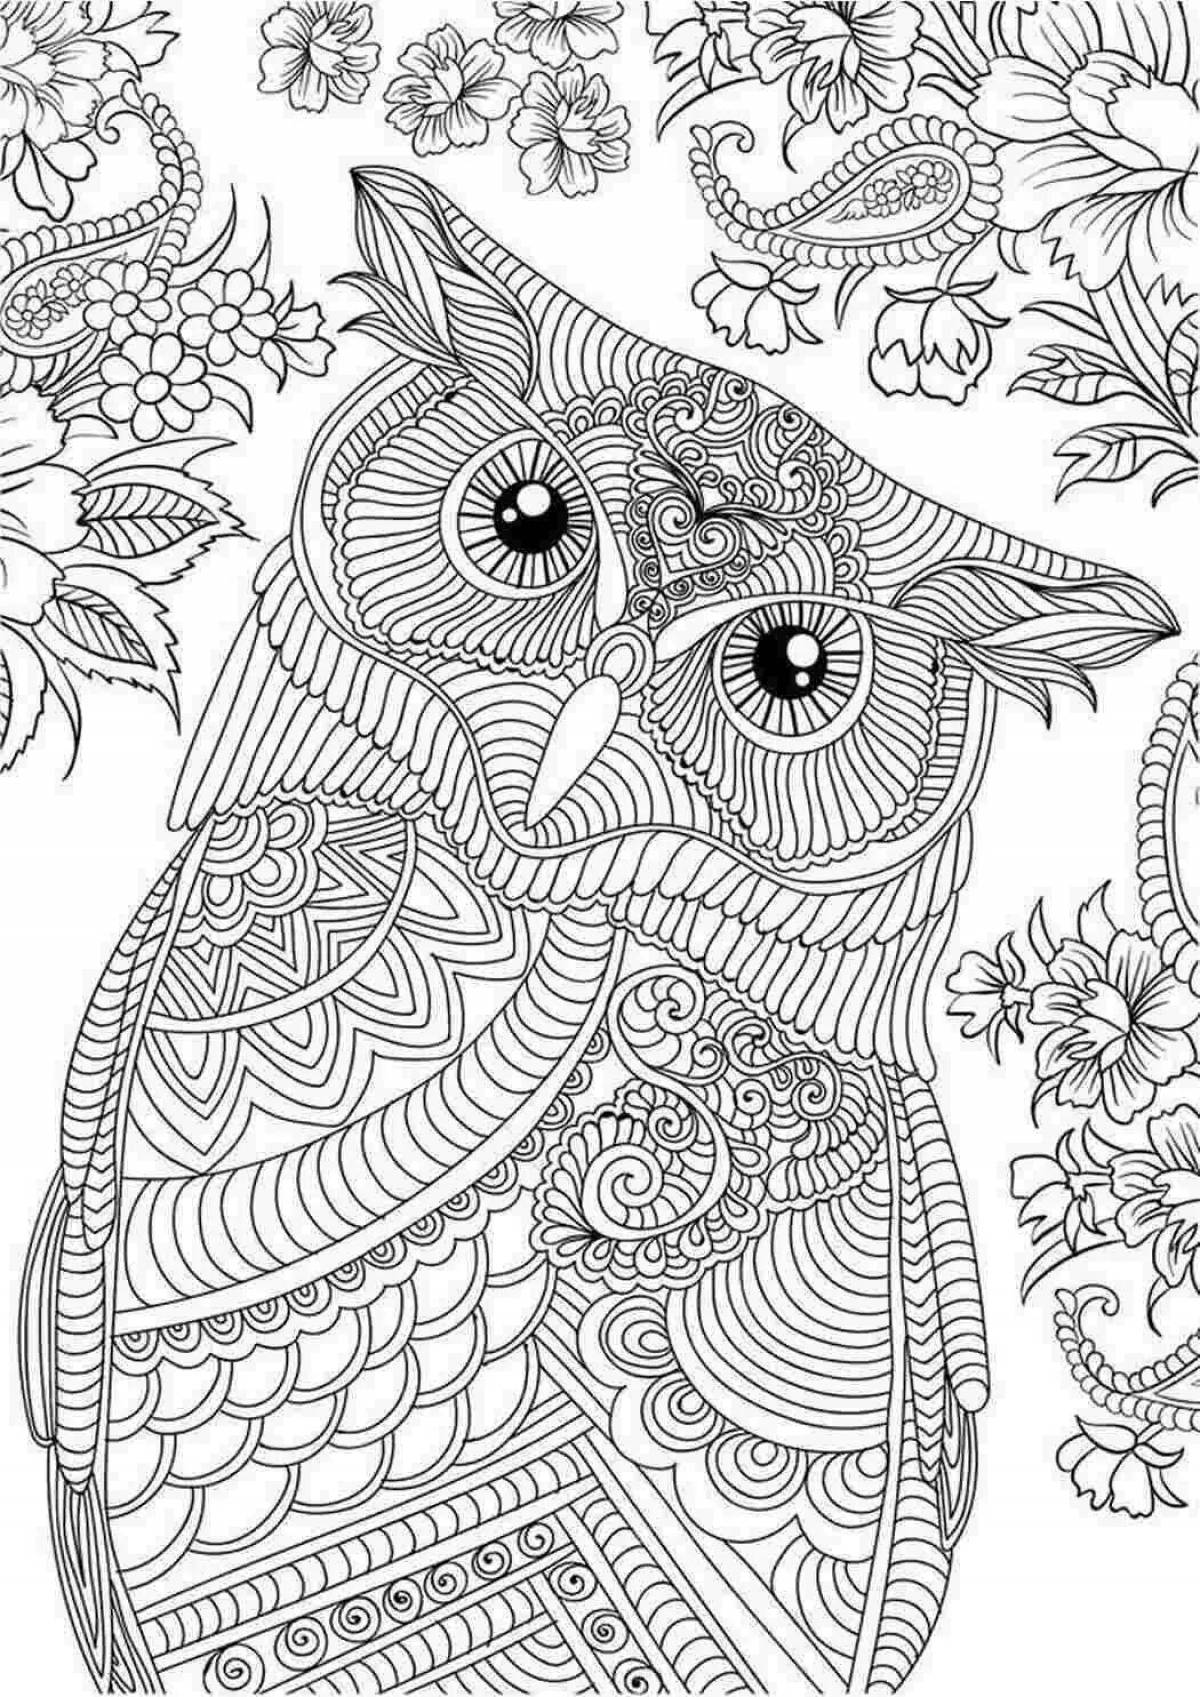 Unusual coloring complex owl